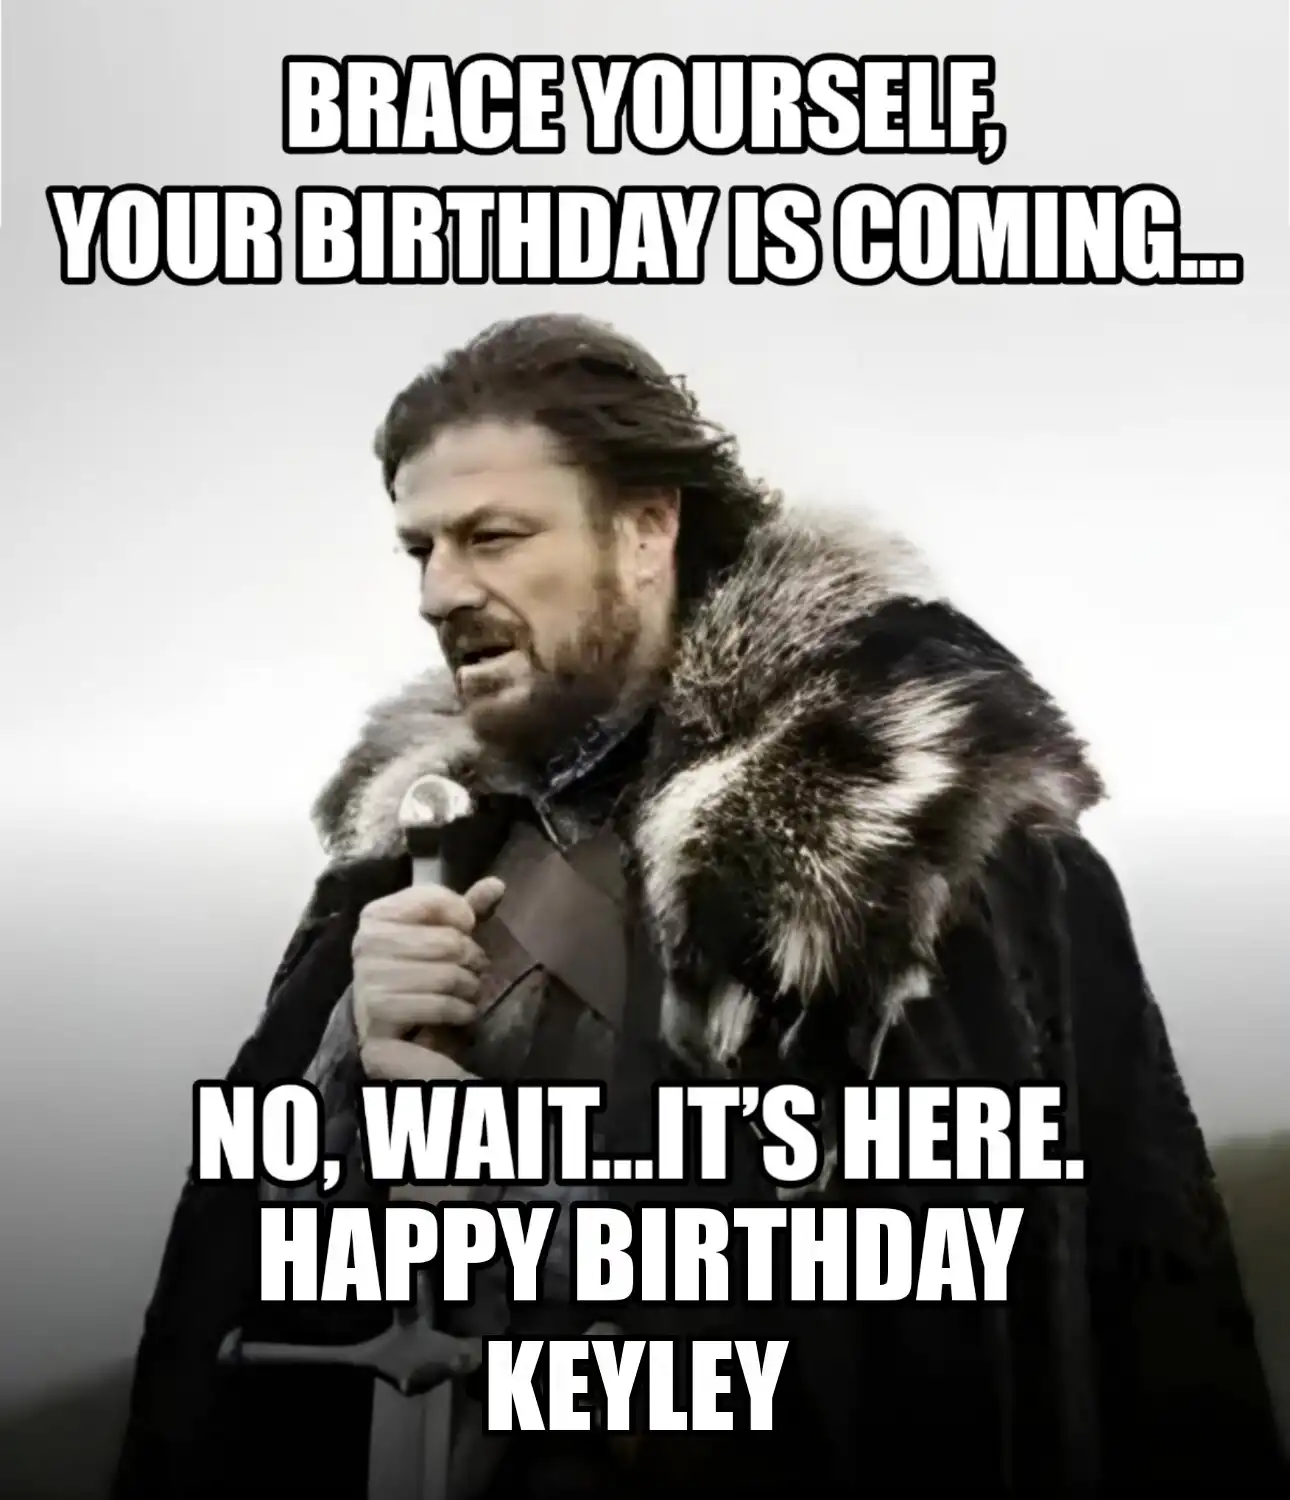 Happy Birthday Keyley Brace Yourself Your Birthday Is Coming Meme